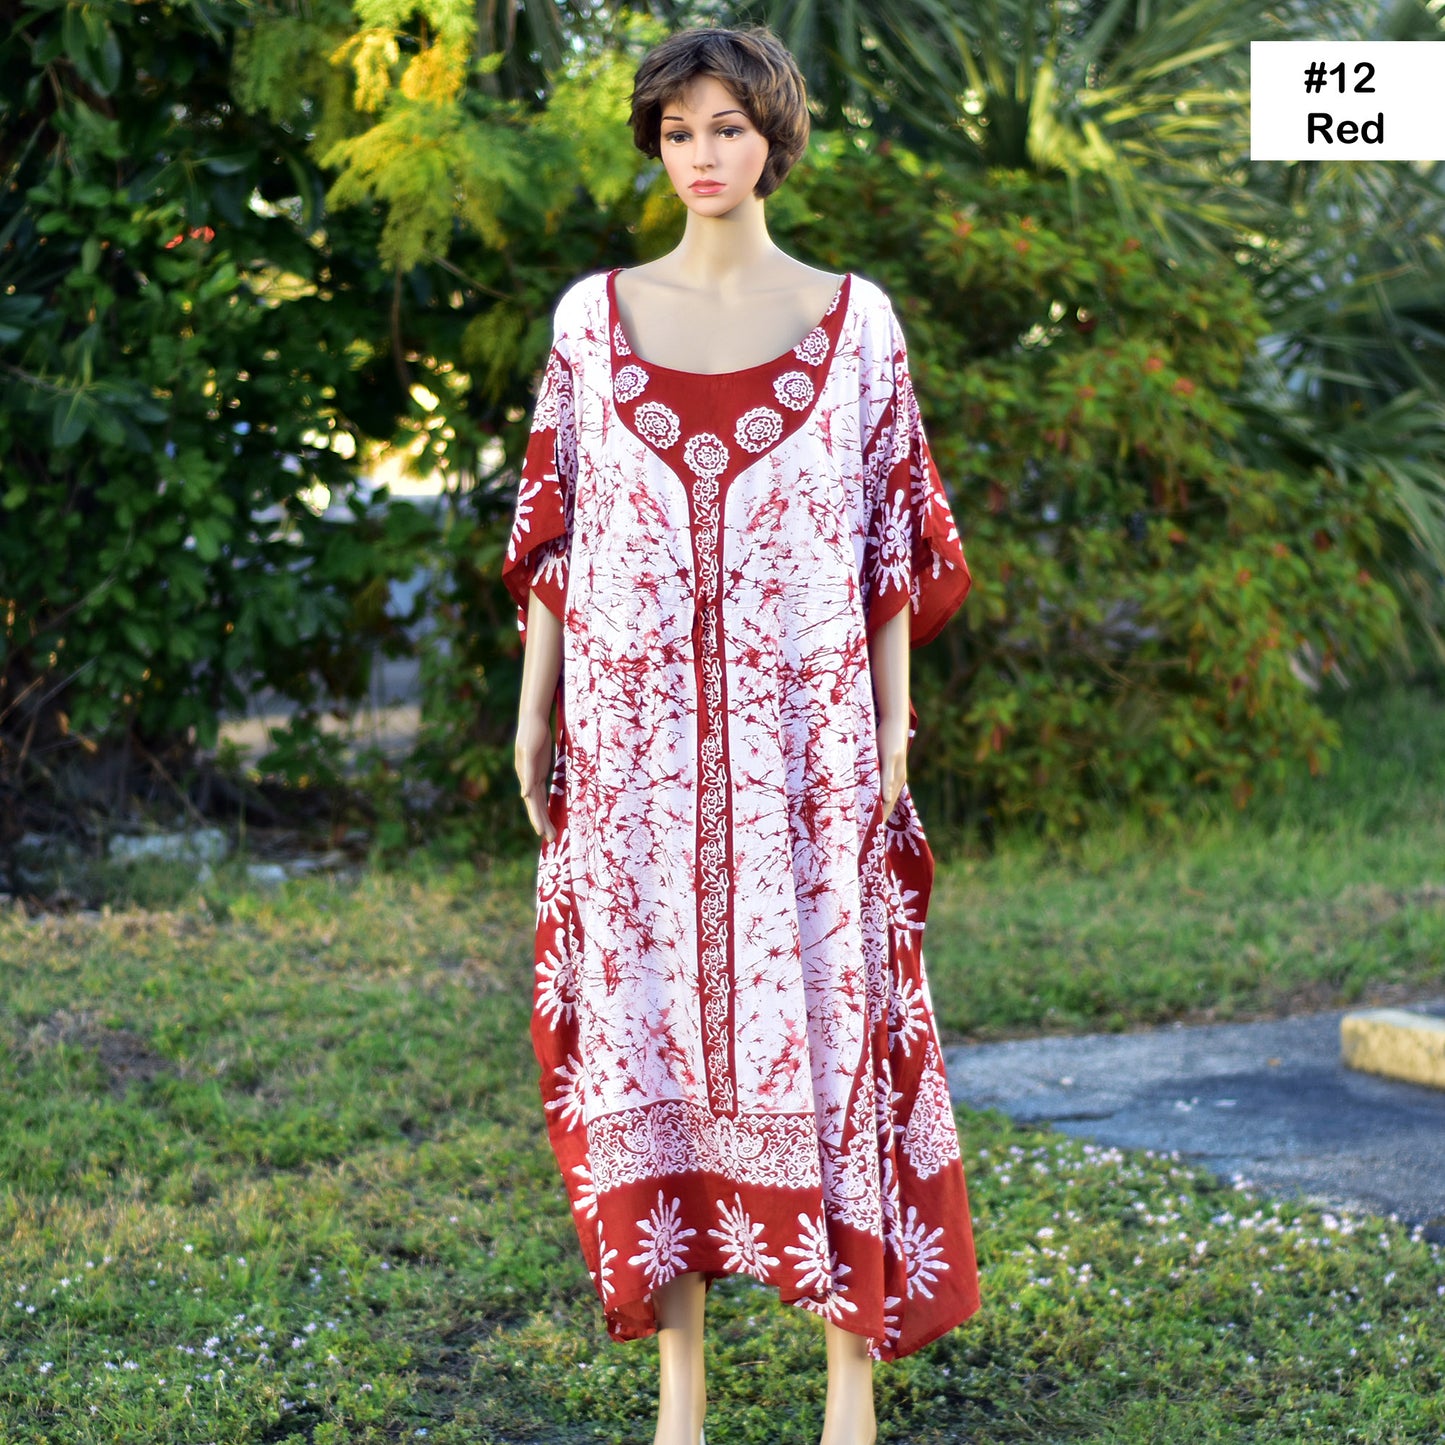 Women's Boho Printed Caftan Kaftan Dress